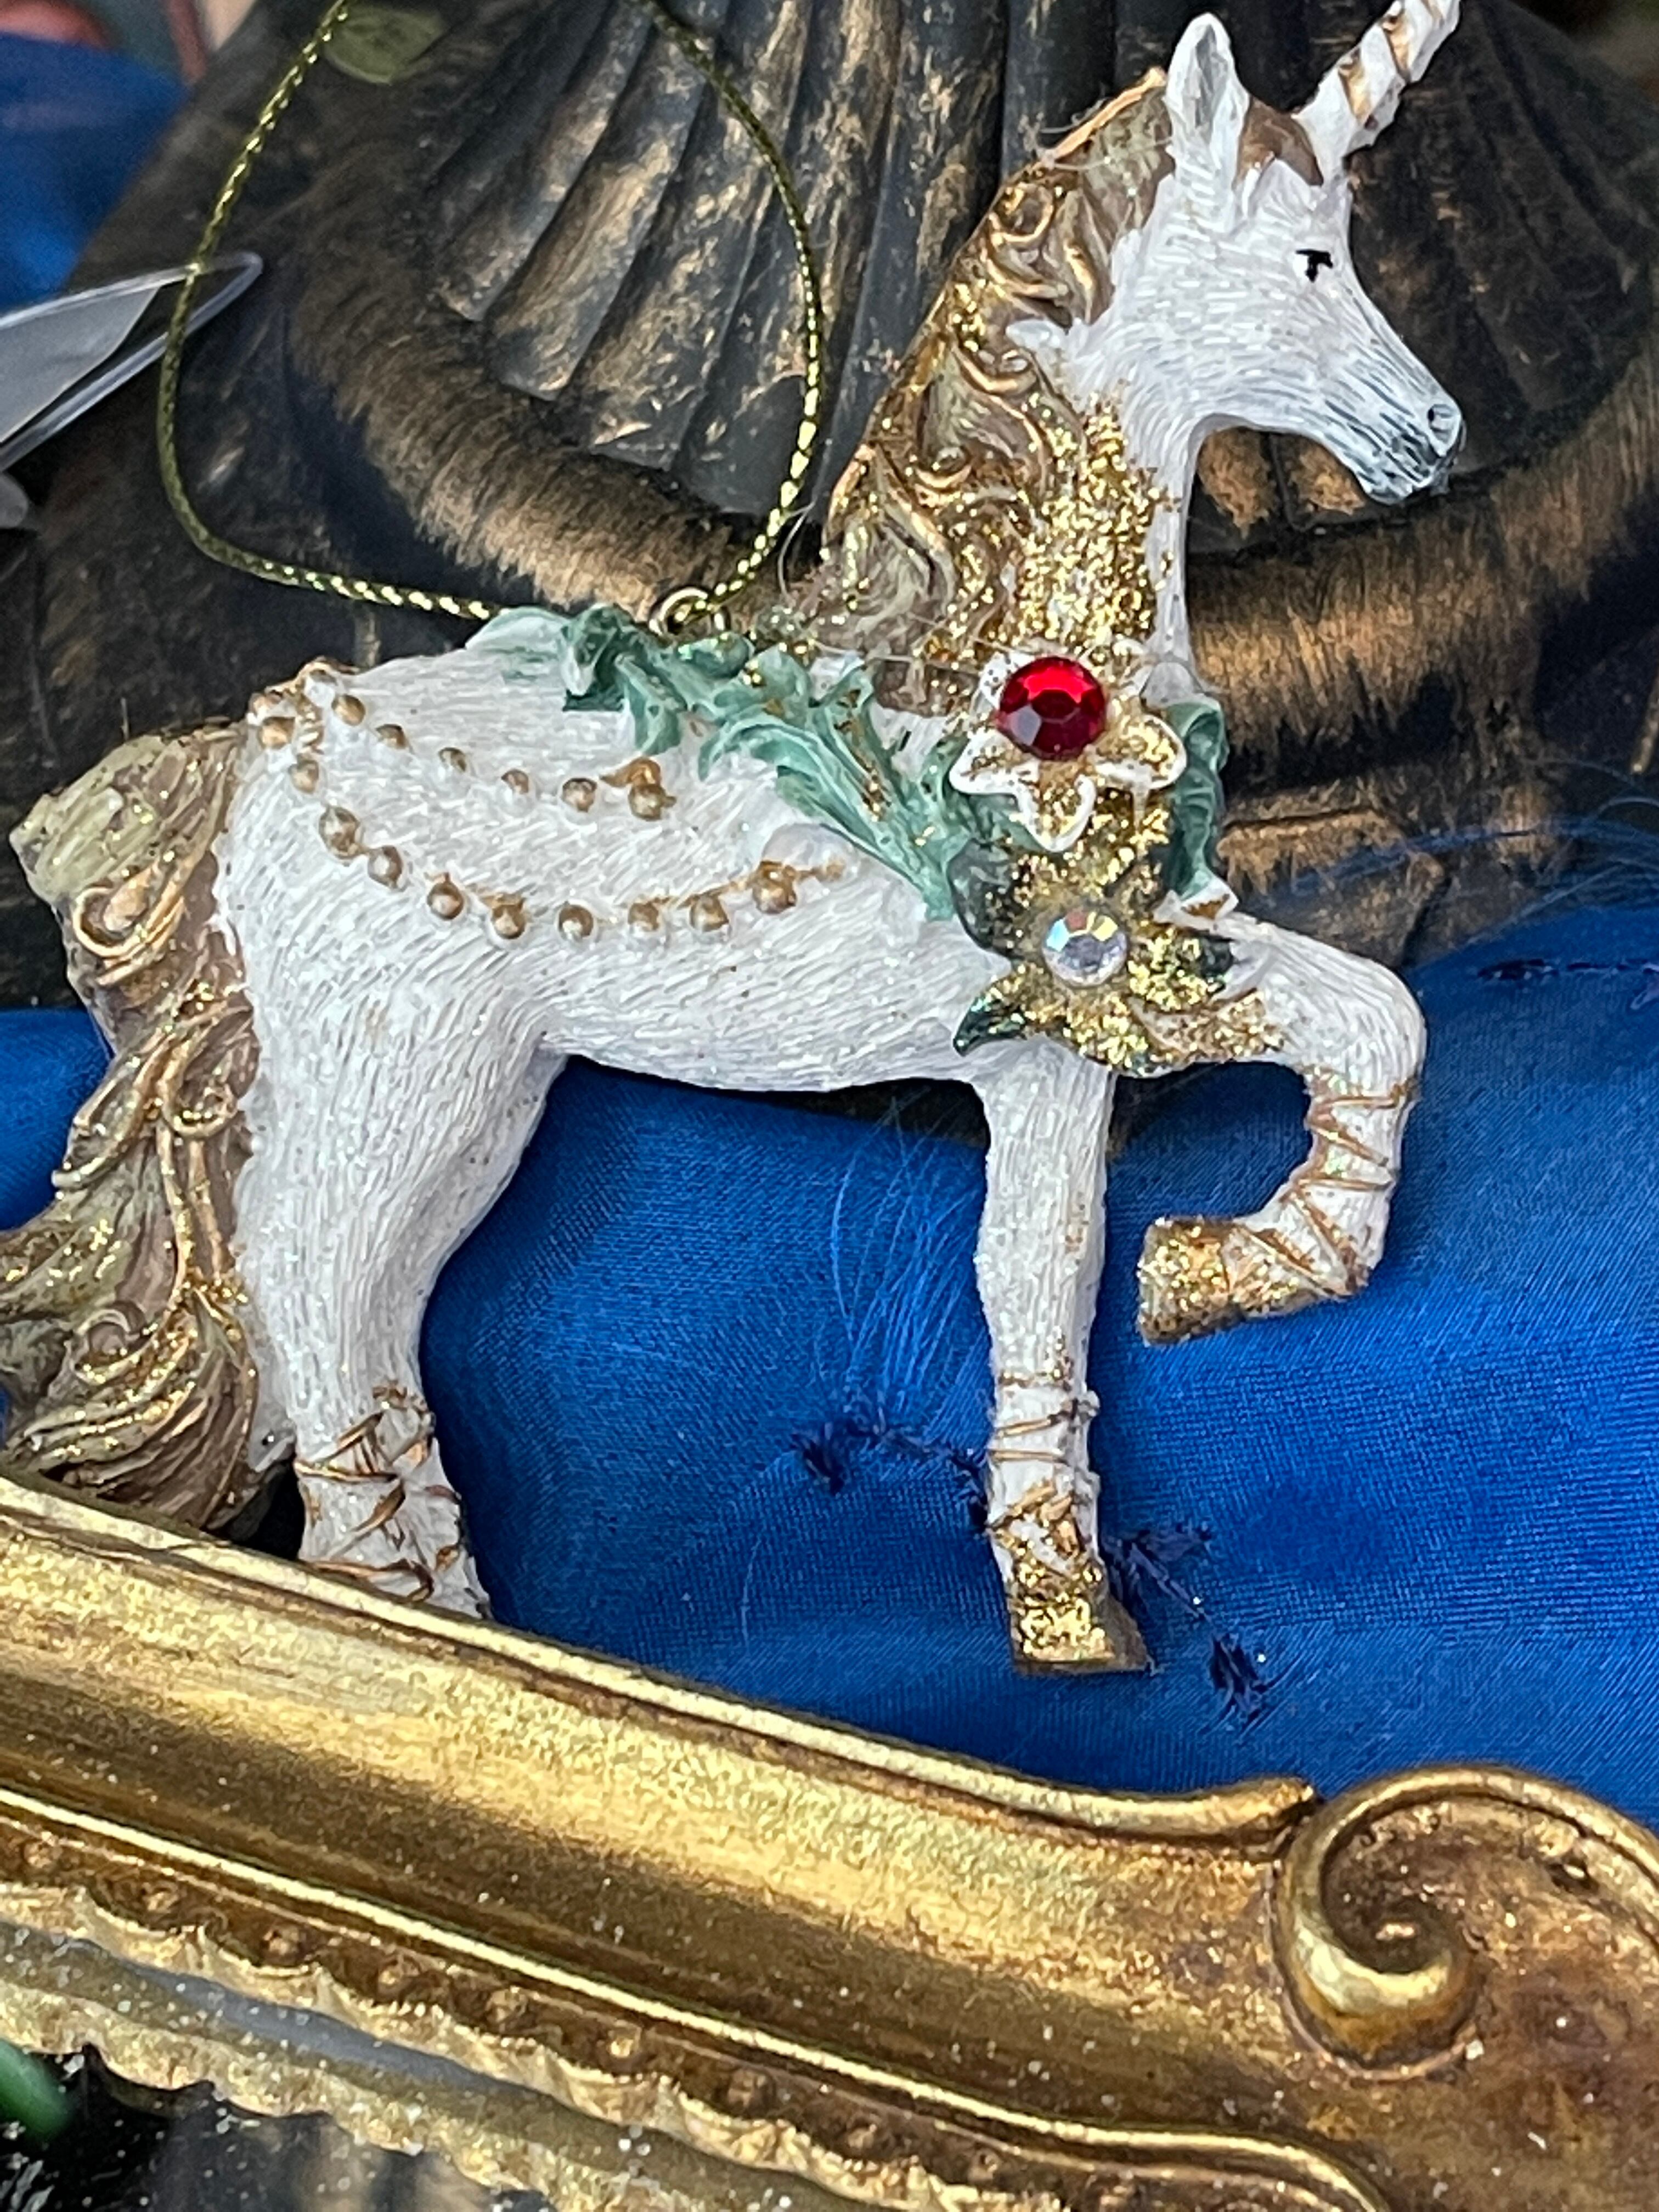 『GISRLA GRAHAM』London  ファンタジーユニコーン オーナメント Fantasy Unicorn with Flower&Jewels イギリス製